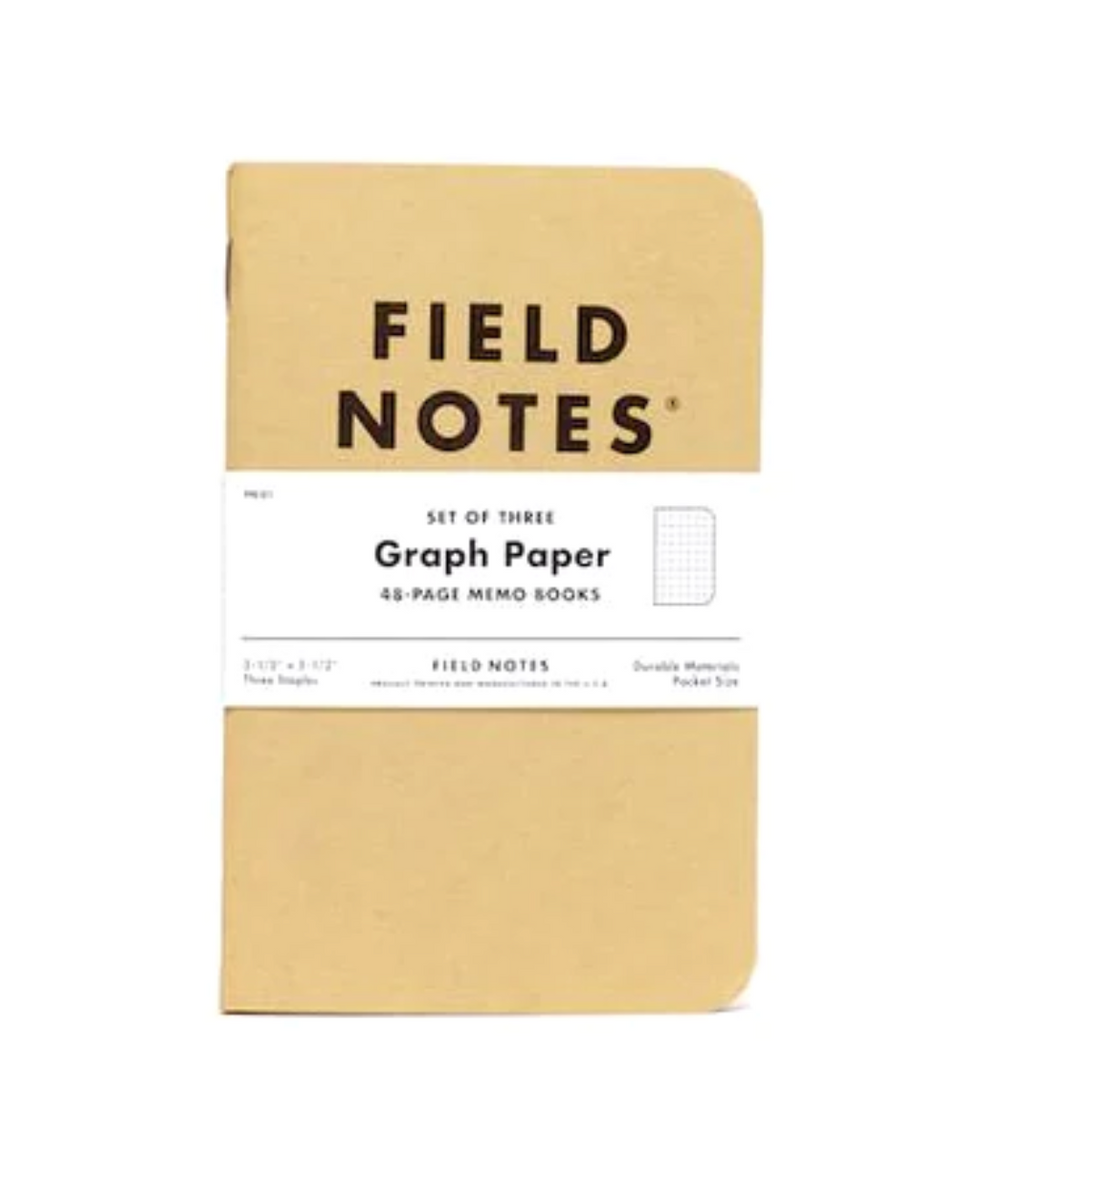 Field Notes Kraft Plus Amber 2-Pack